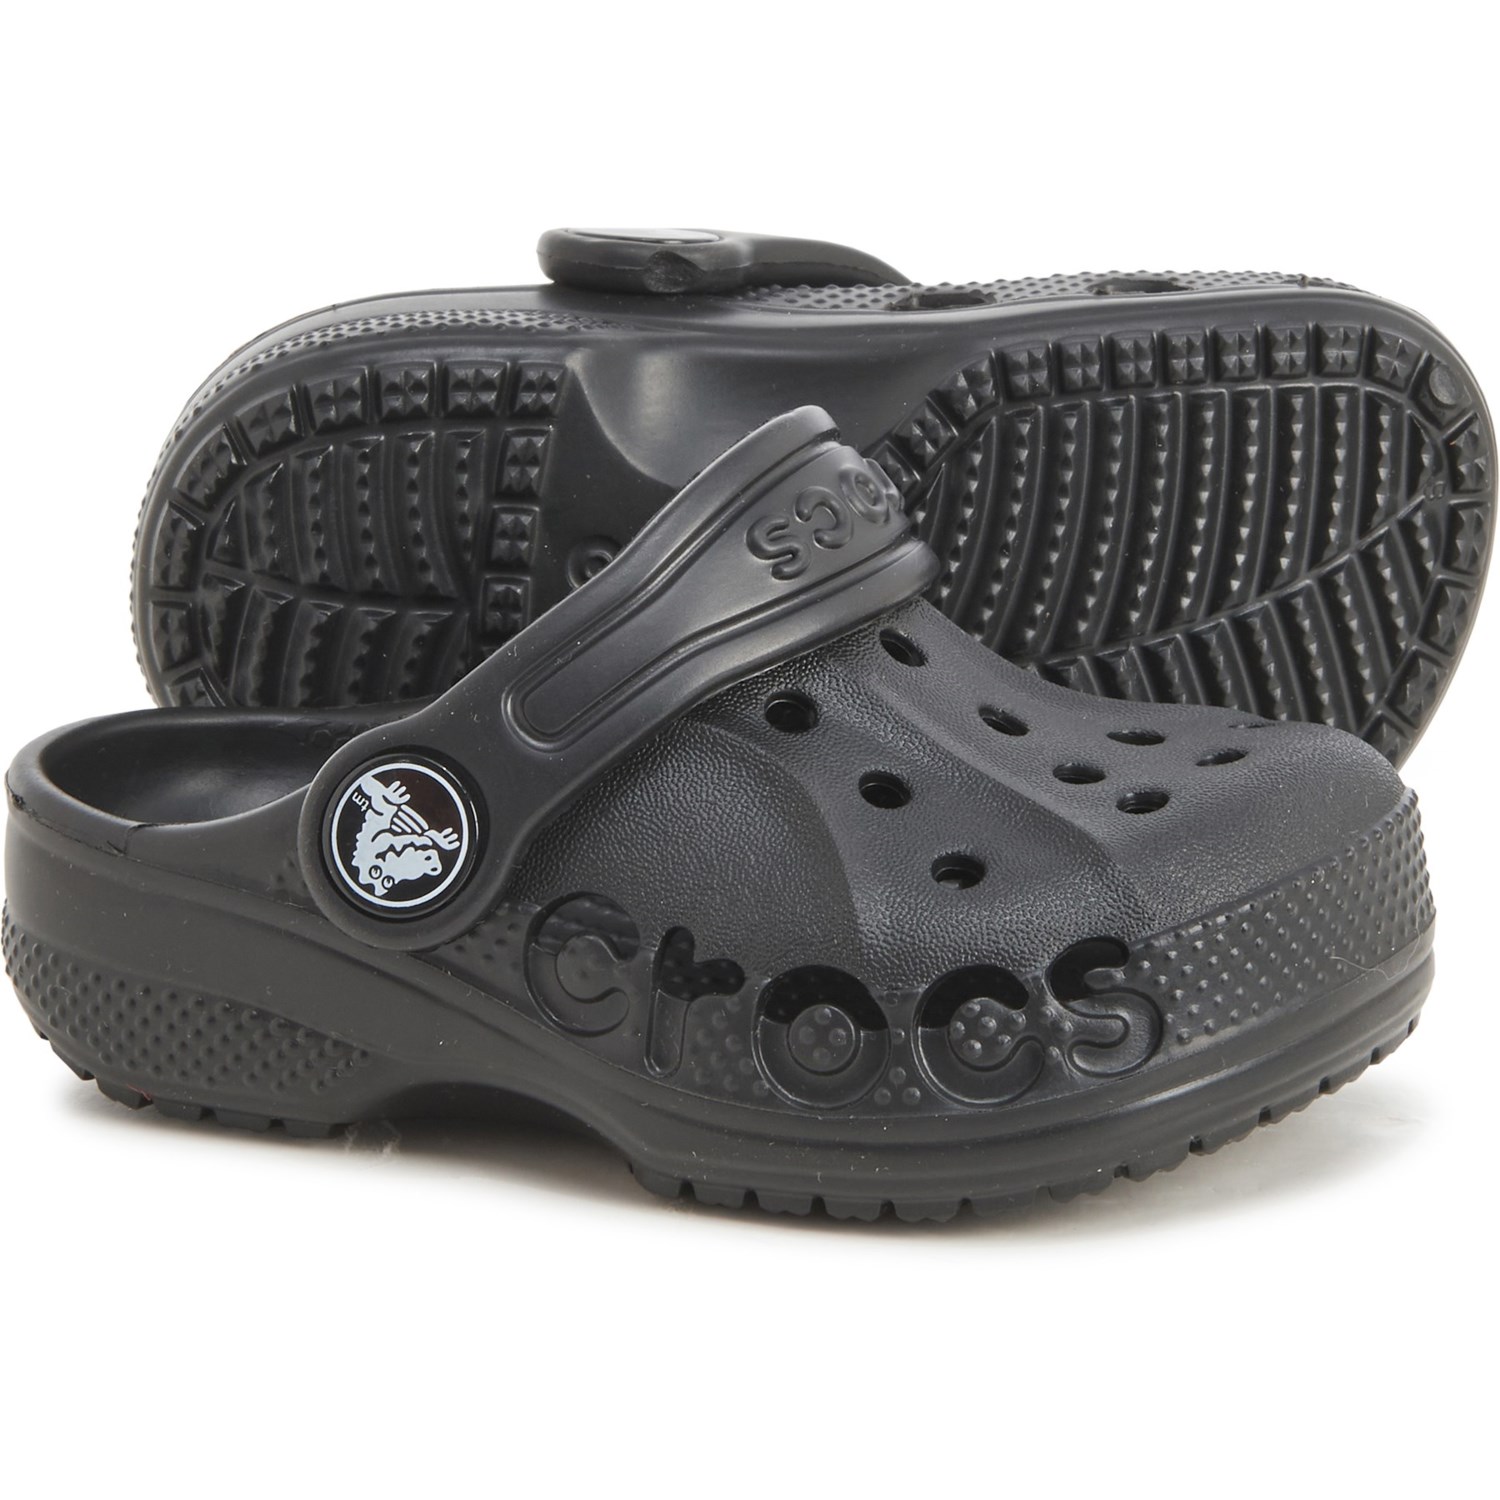 New Boys/Girls Kids Crocs Baya black clogs shoes 